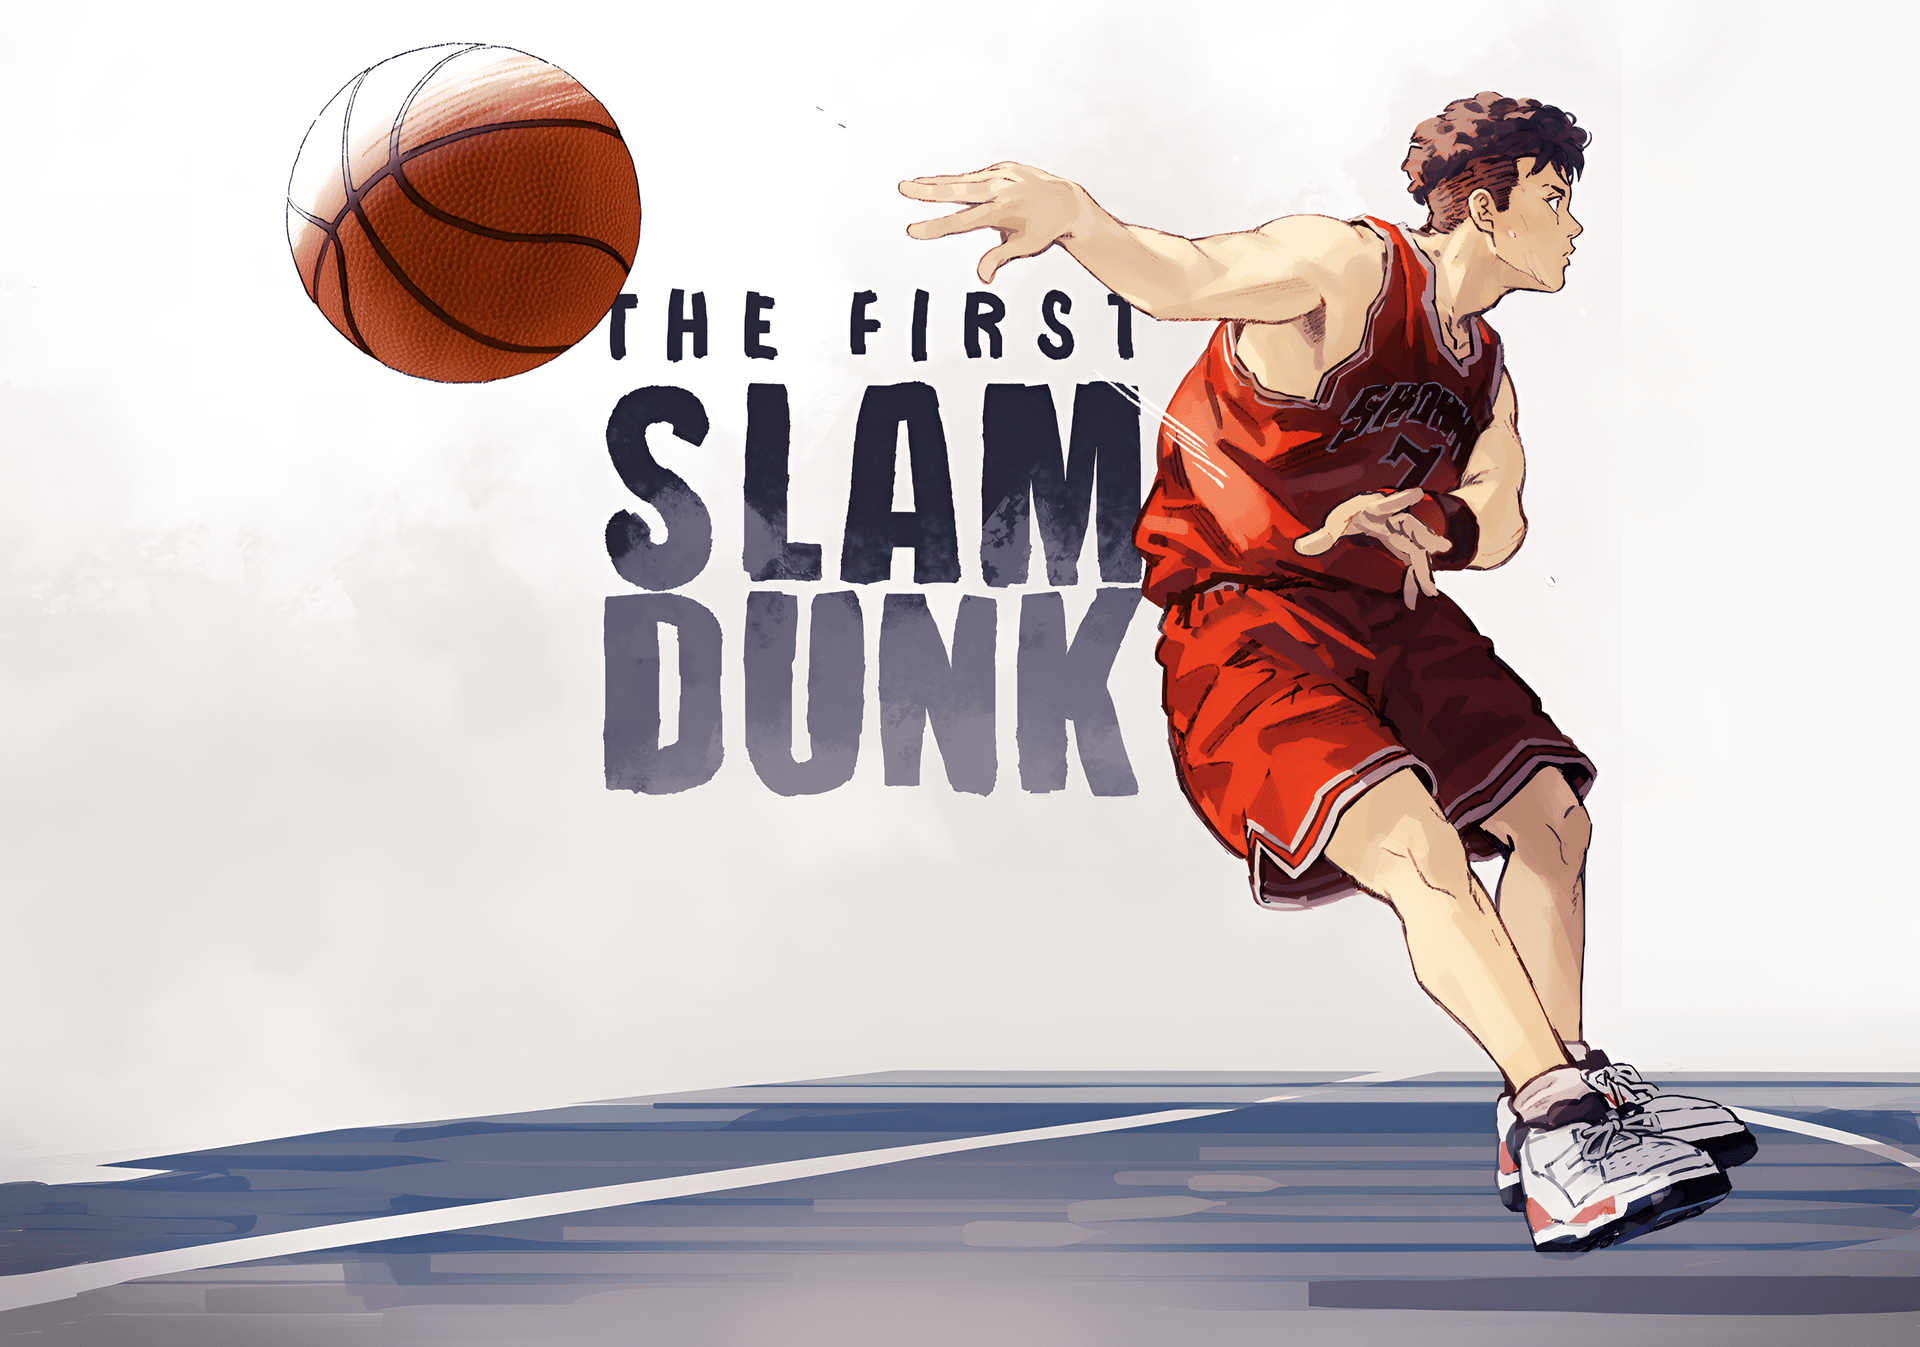 First slam. The first Slam Dunk. Мияги рёта слэм данк. Ryota Miyagi the first Slam Dunk.